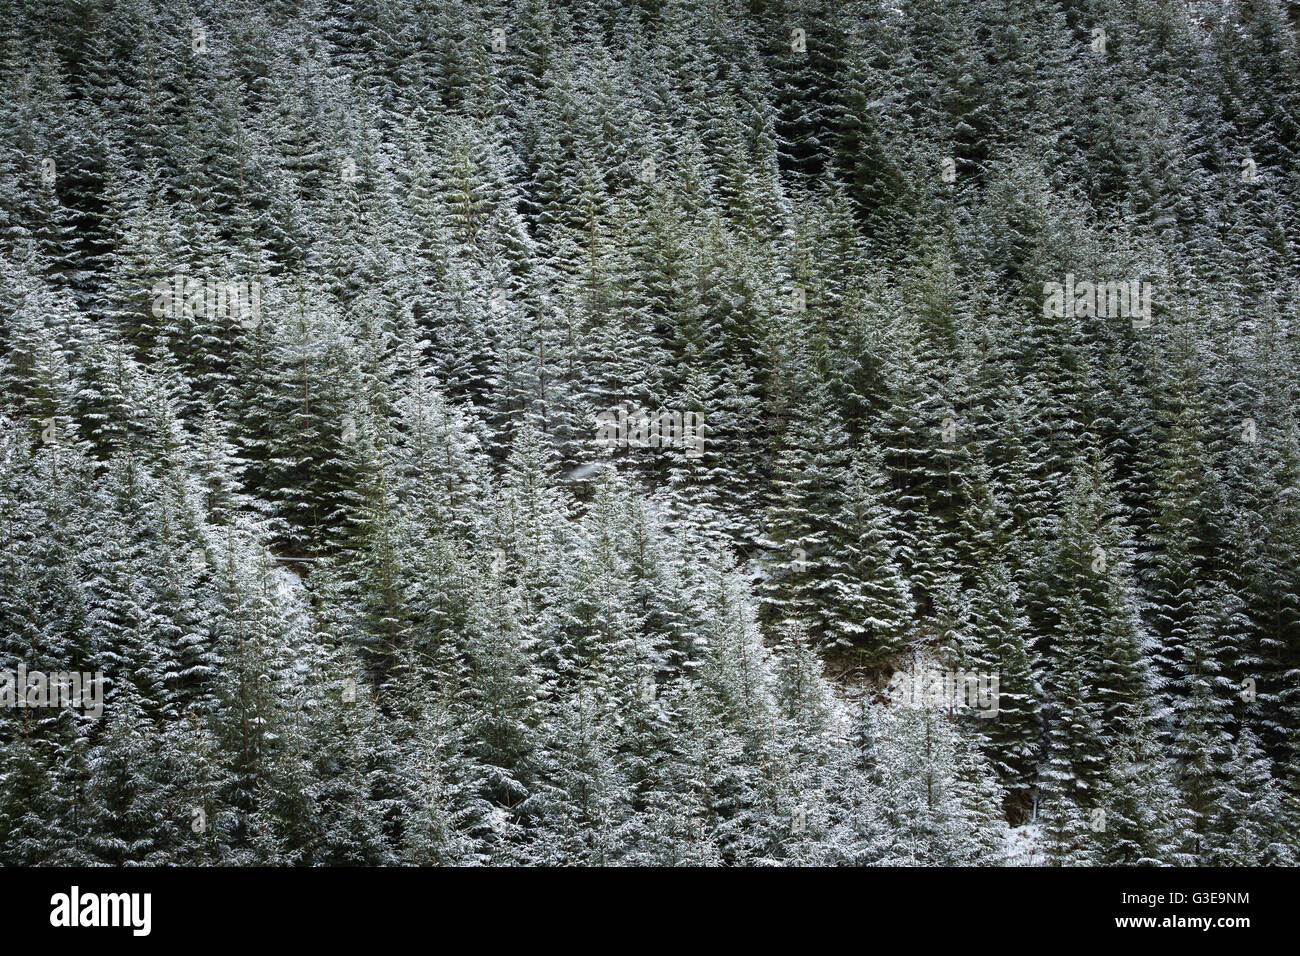 Scots pine forest under fresh snowfall, Western Highlands, Scotland Stock Photo